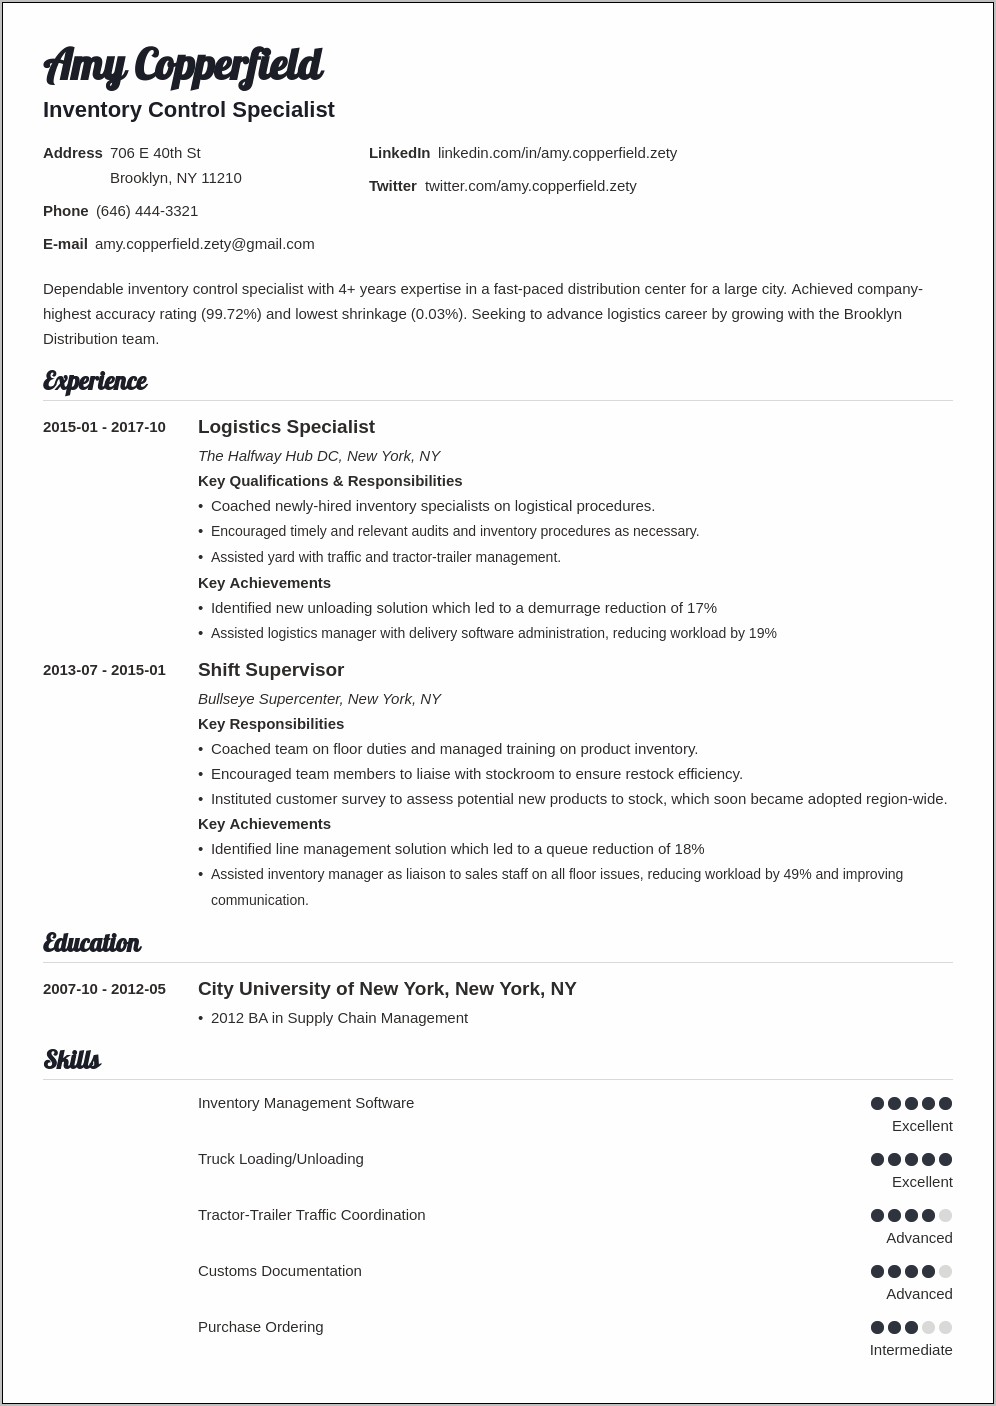 Price Scan Coordinator Job Description Resume